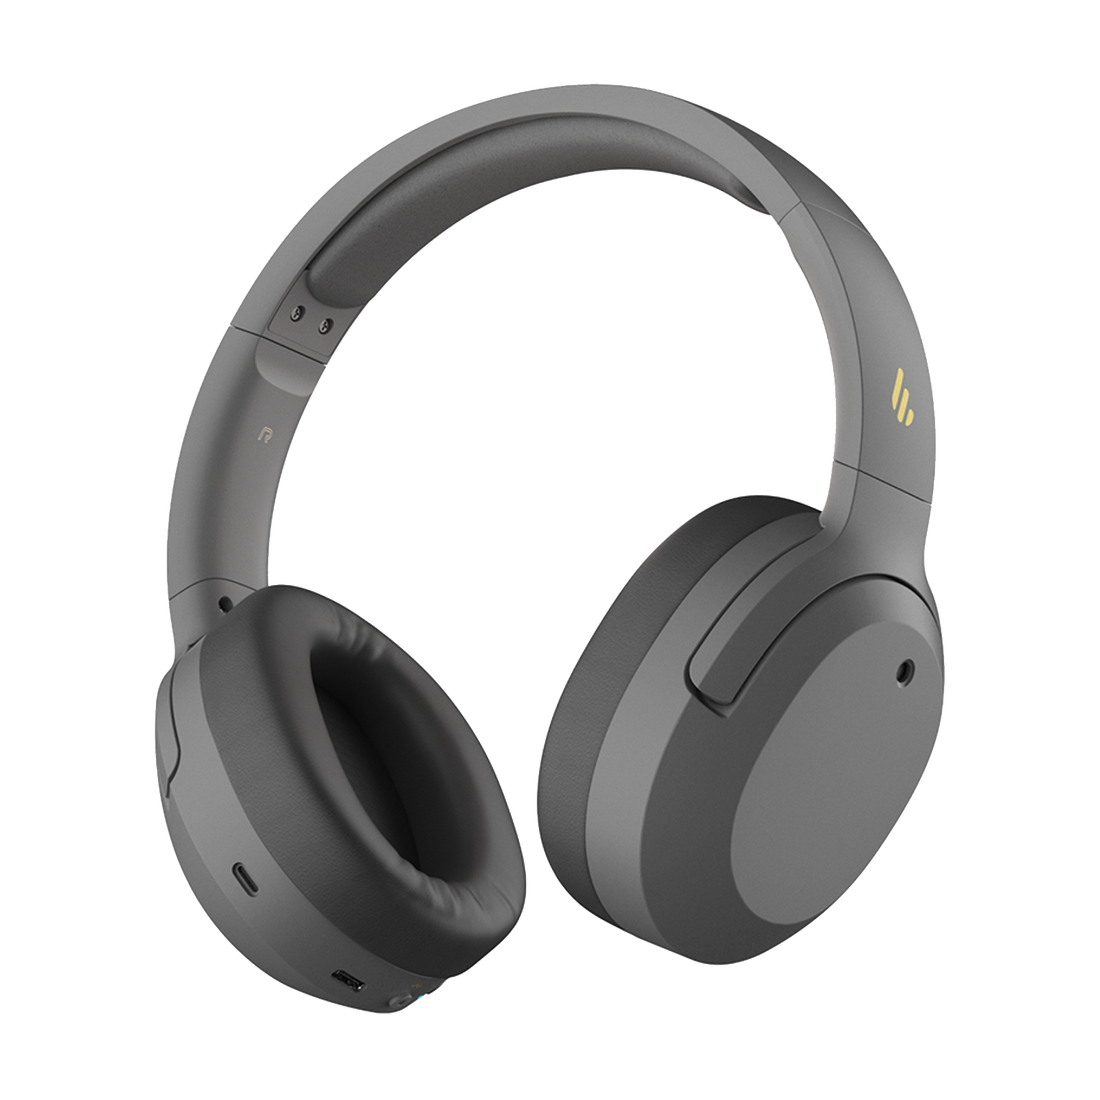 W820NB Hi-Res Audio Headphones Hybrid ANC Bluetooth Stereo Headphones